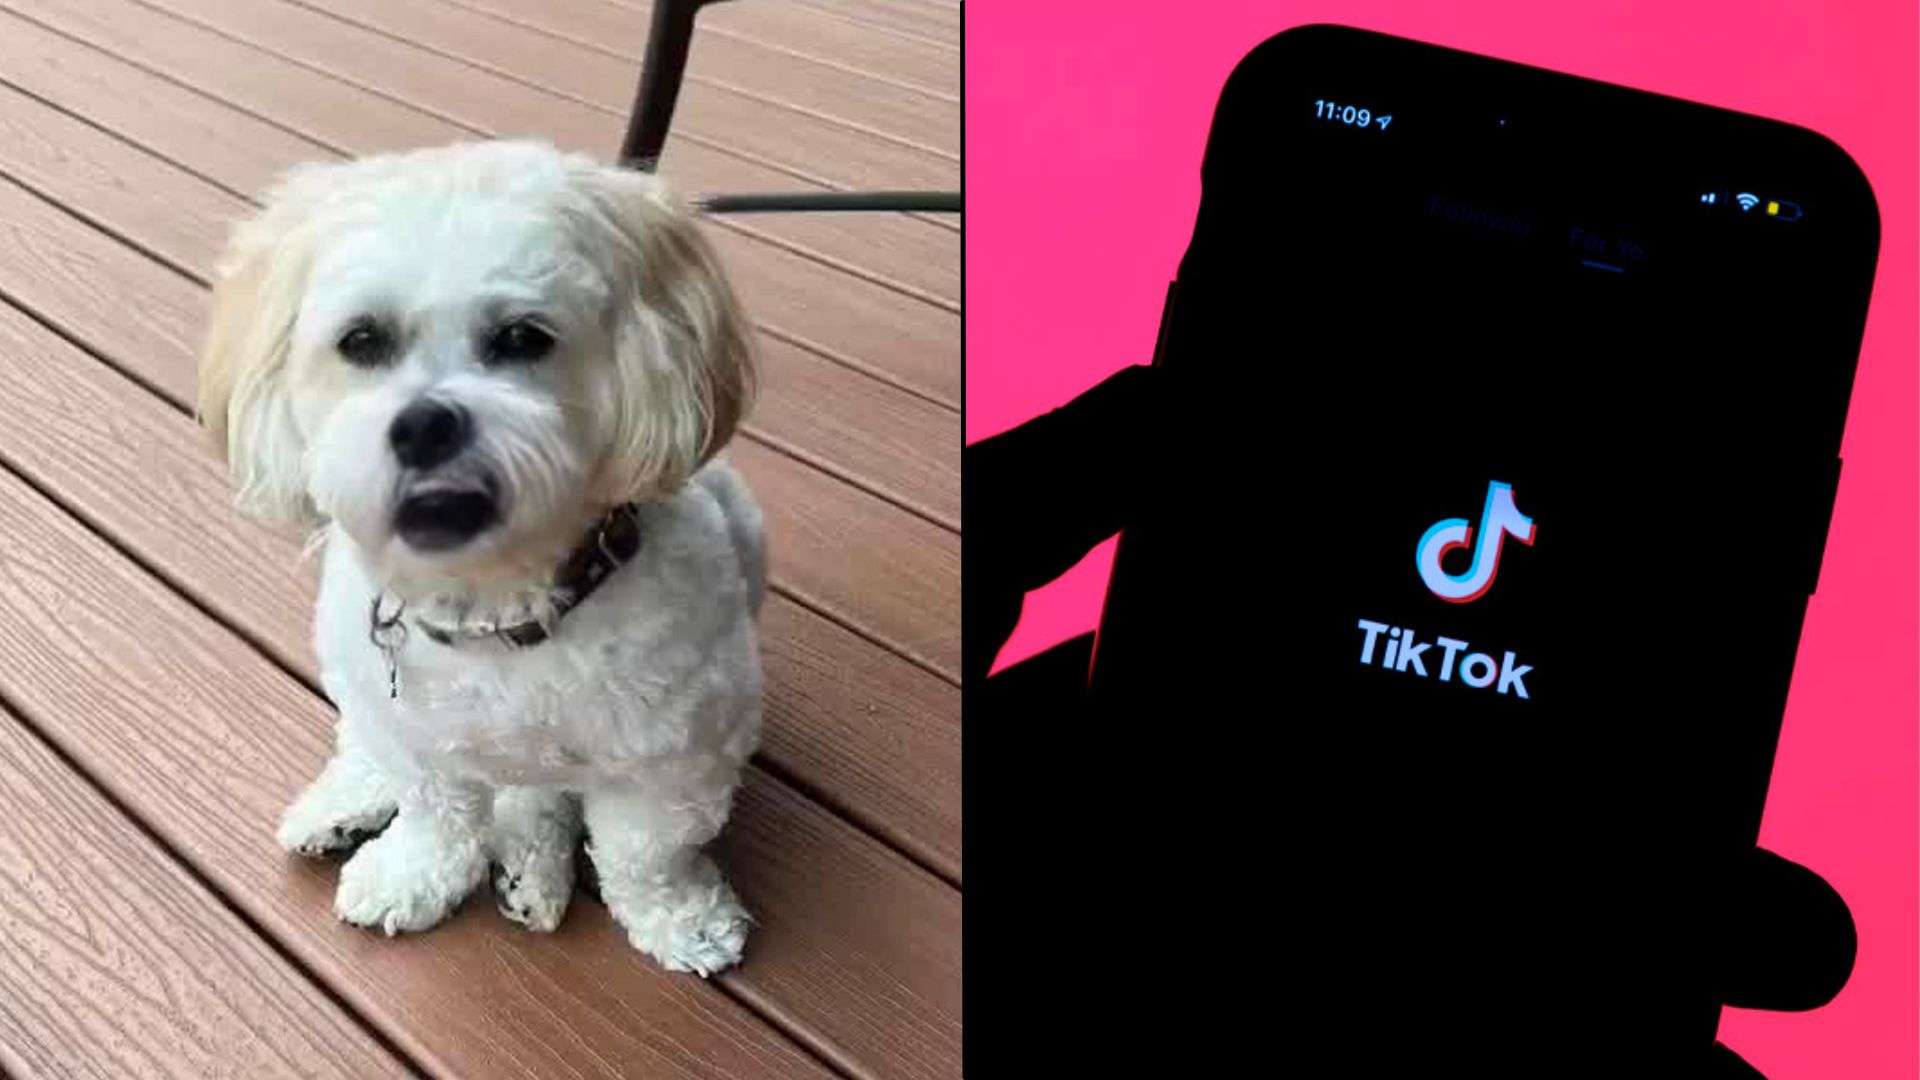 White dog sitting on wood next to pink TikTok logo